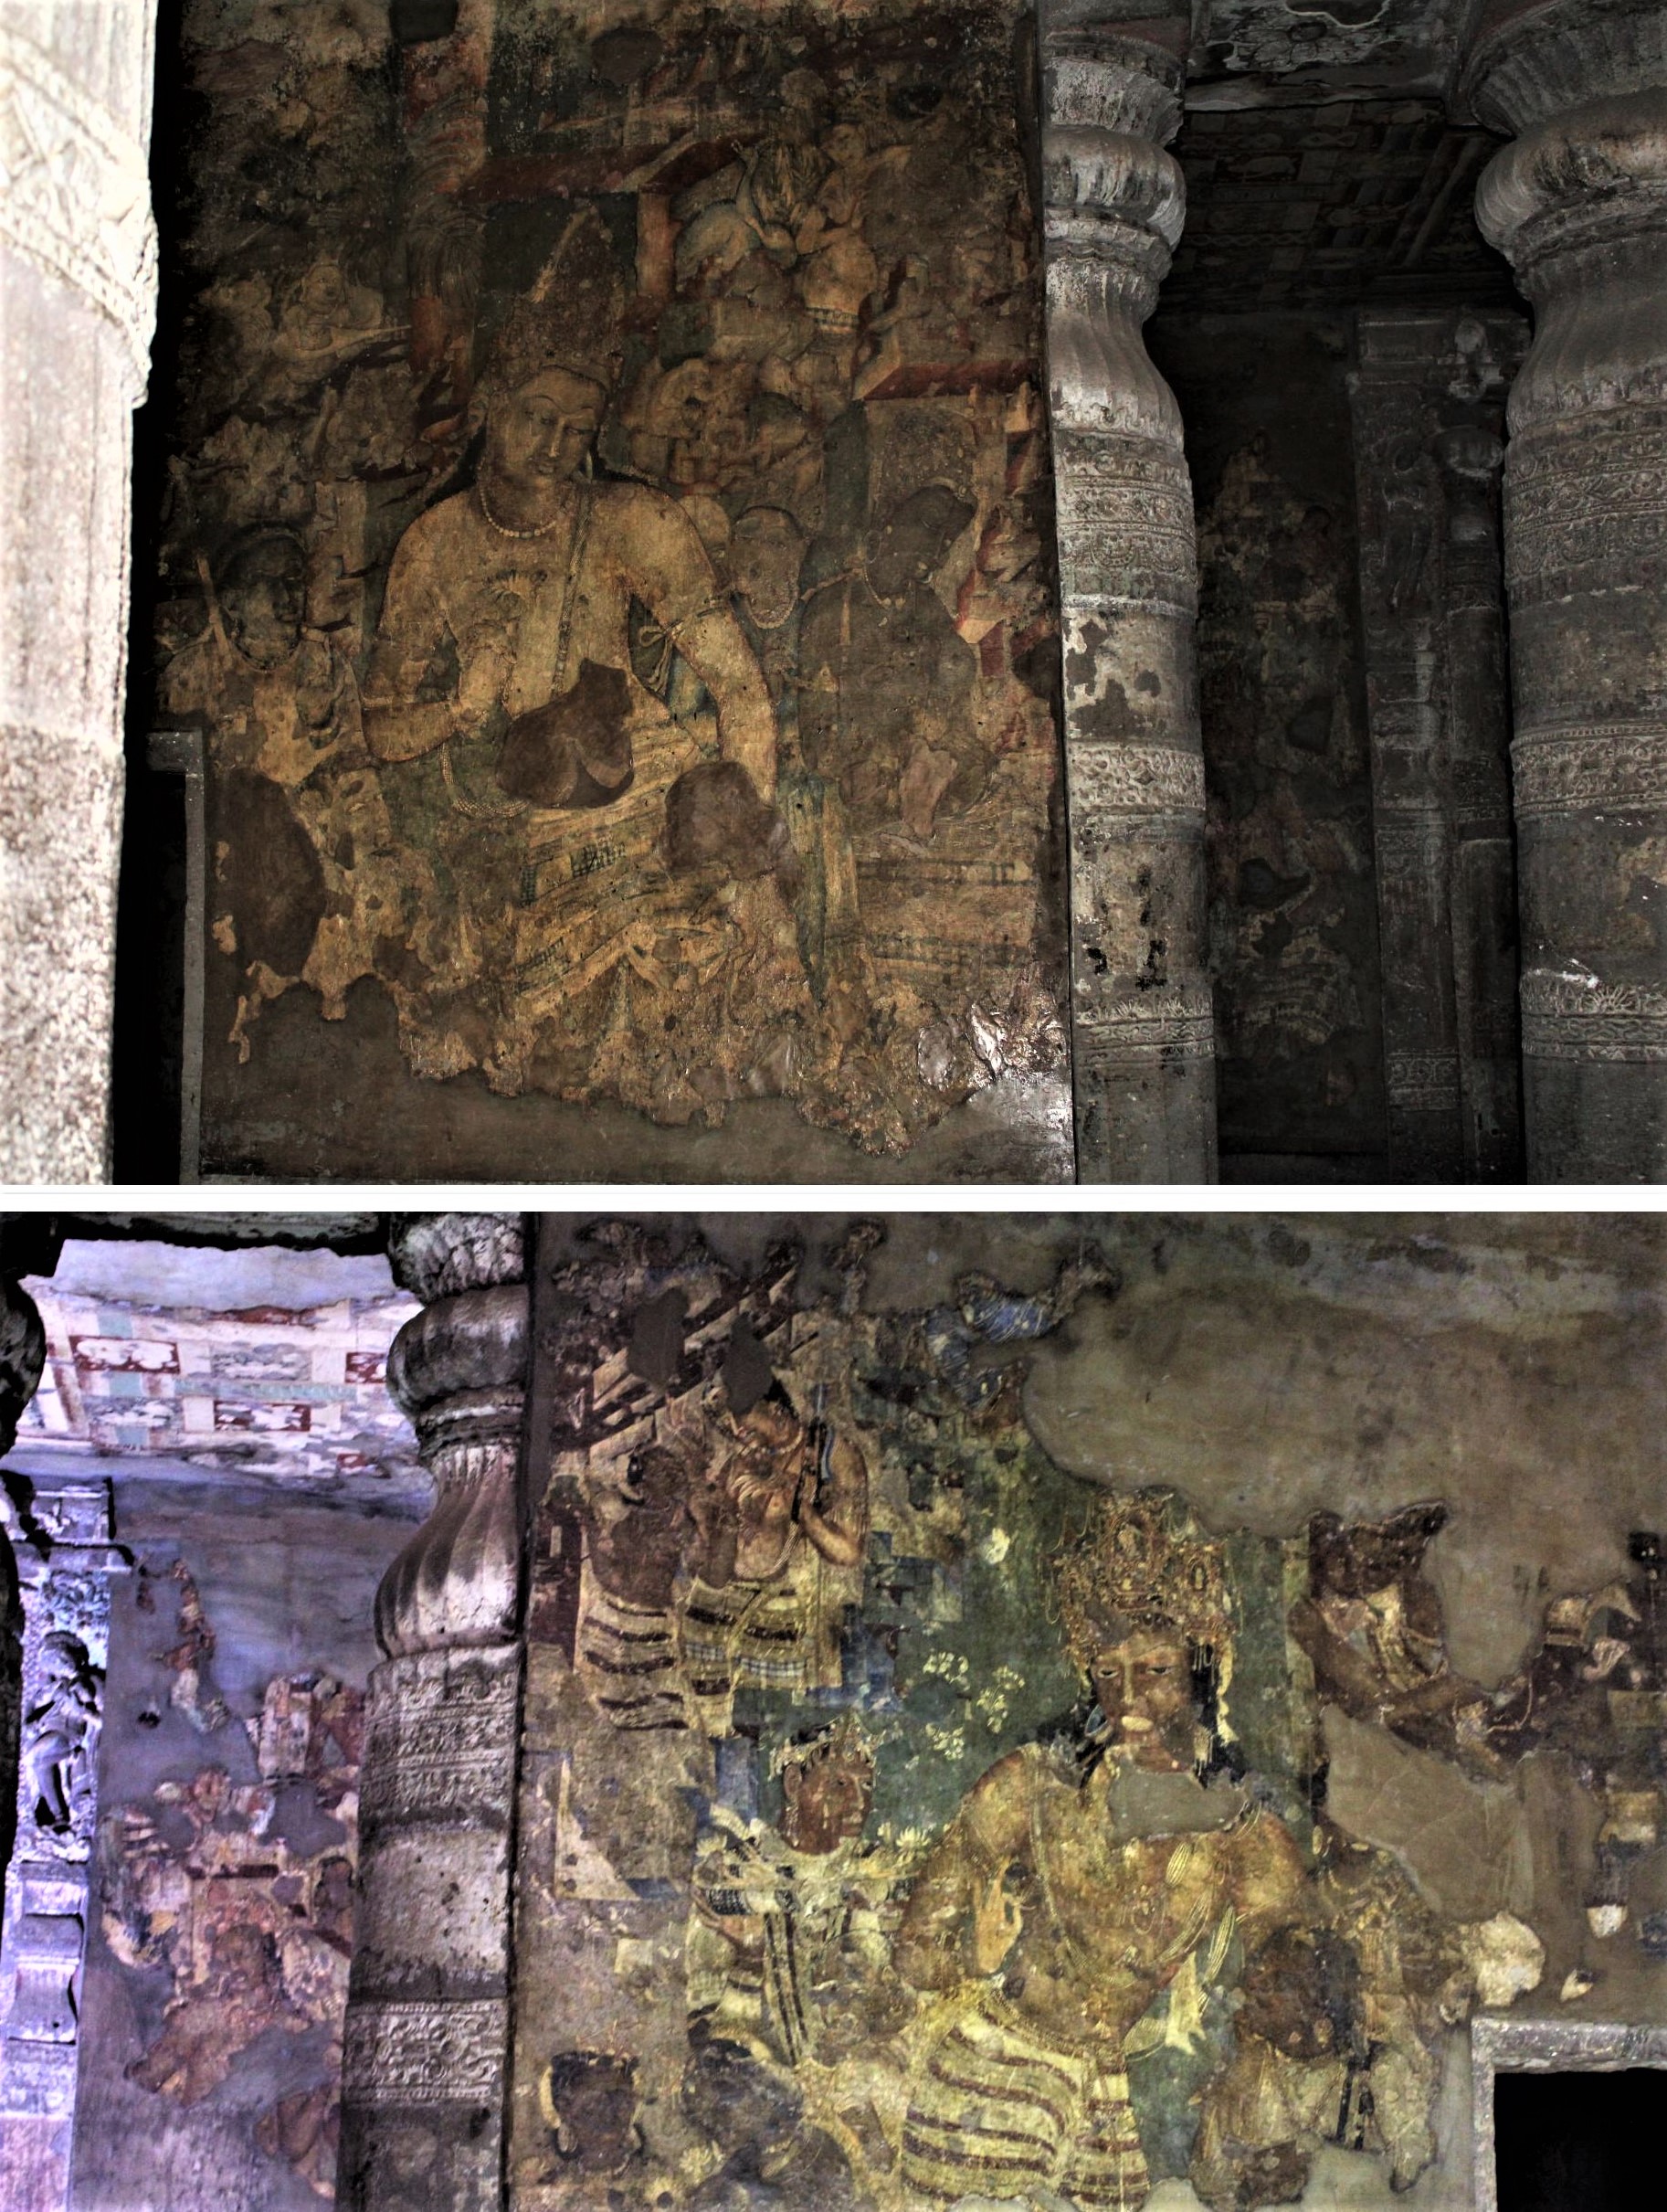 Padmapani (Top) and Vajrapani (Bottom).